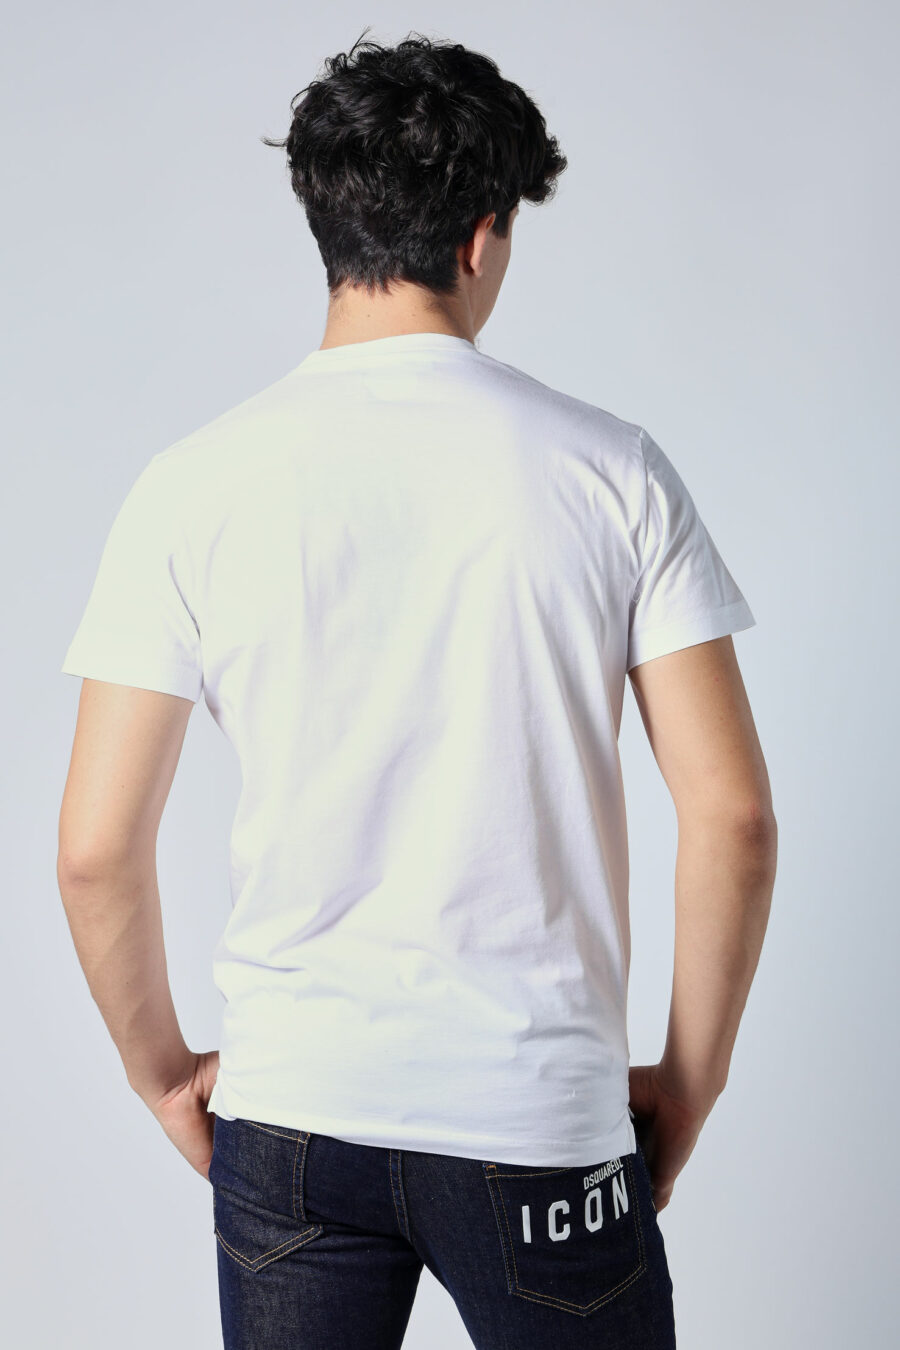 T-shirt blanc avec logo maxi "college" bleu - Untitled Catalog 05654